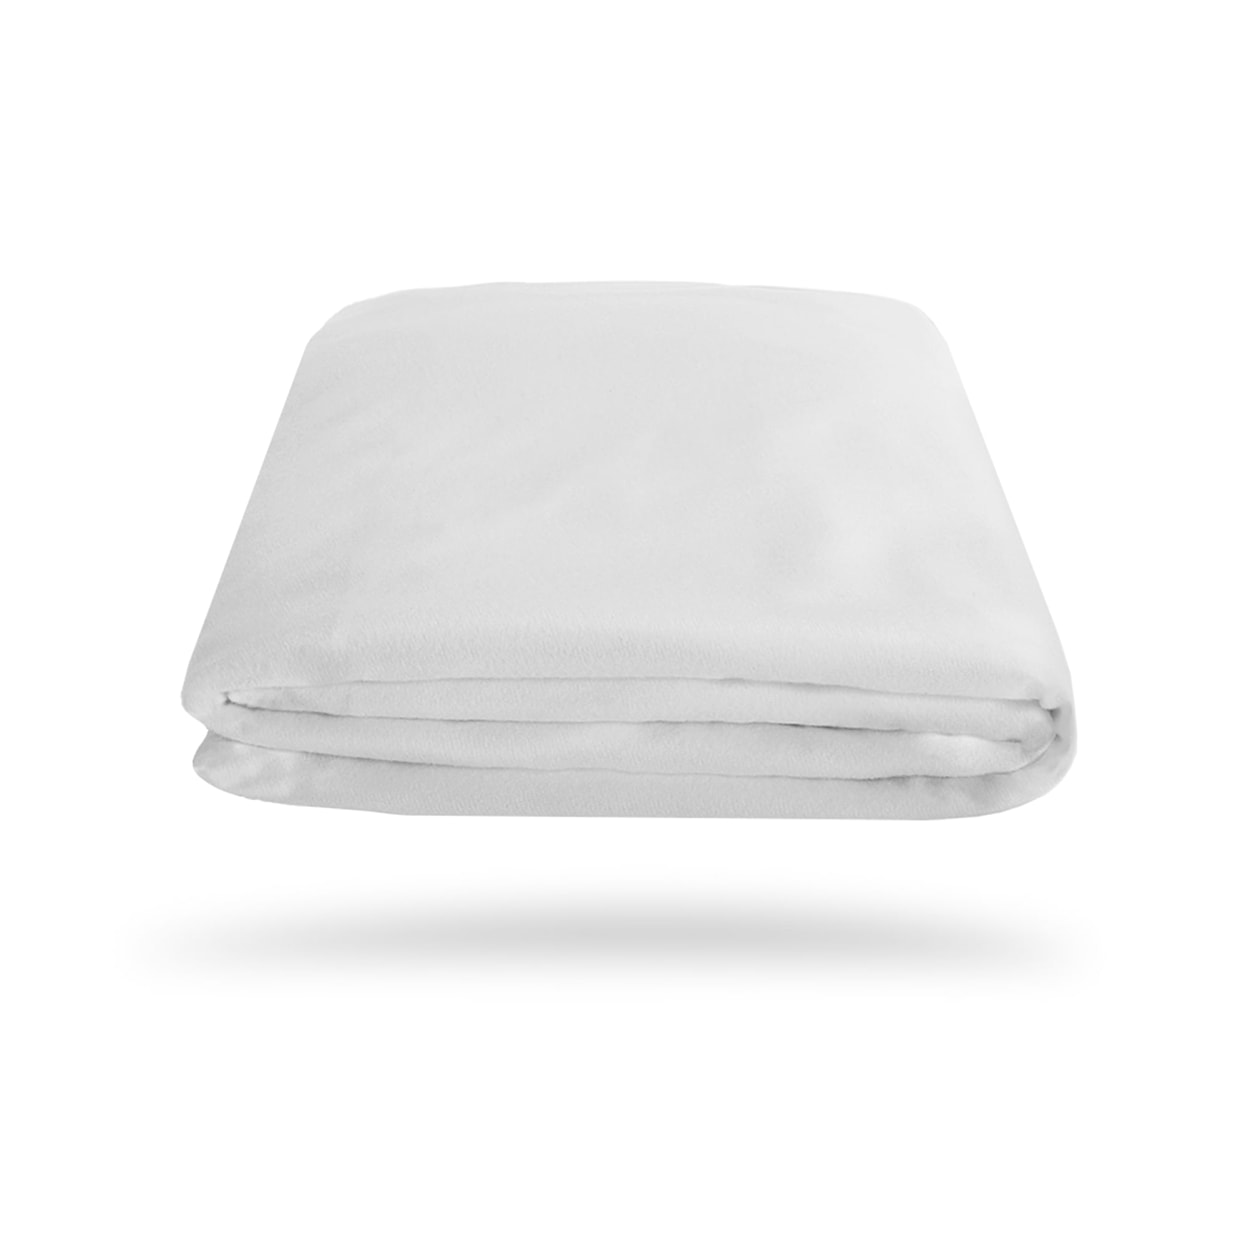 Bedgear iProtect Sofa Protector Sofa Bed Mattress Protector - Full